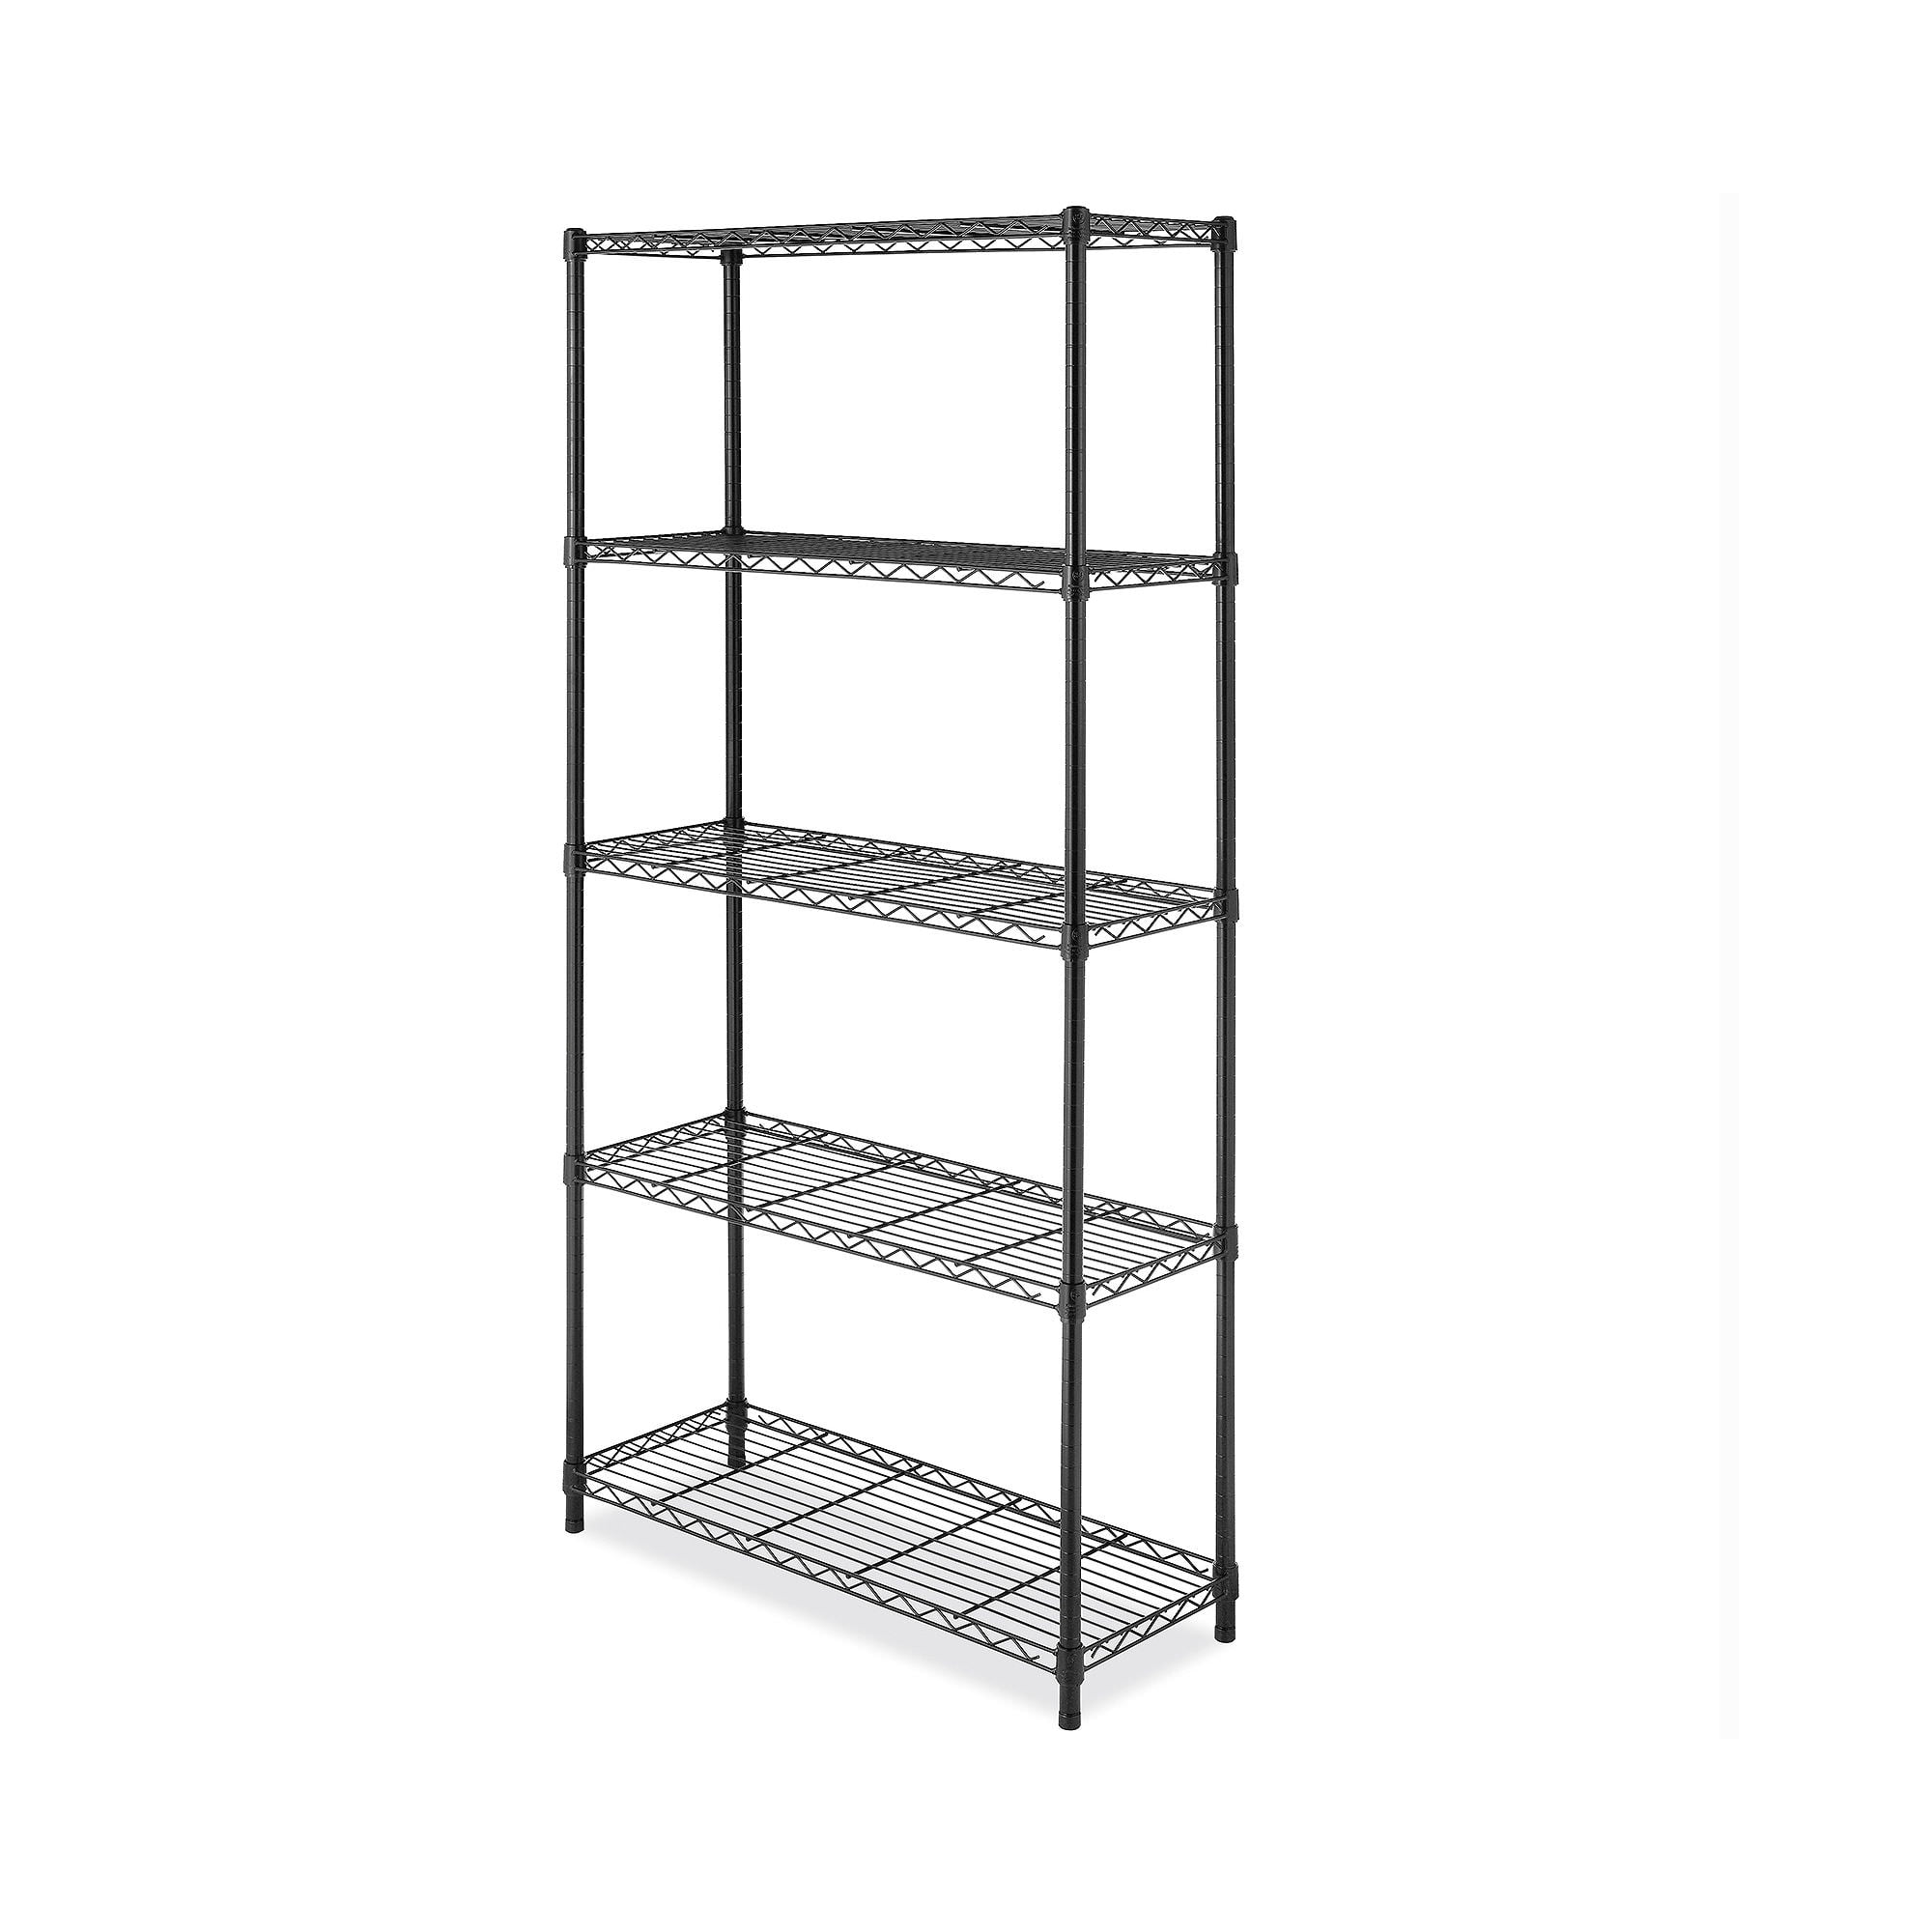 Adjustable Folding 5-Tier Shelves Wire Bakery Bread Rack Floor Display Black New 